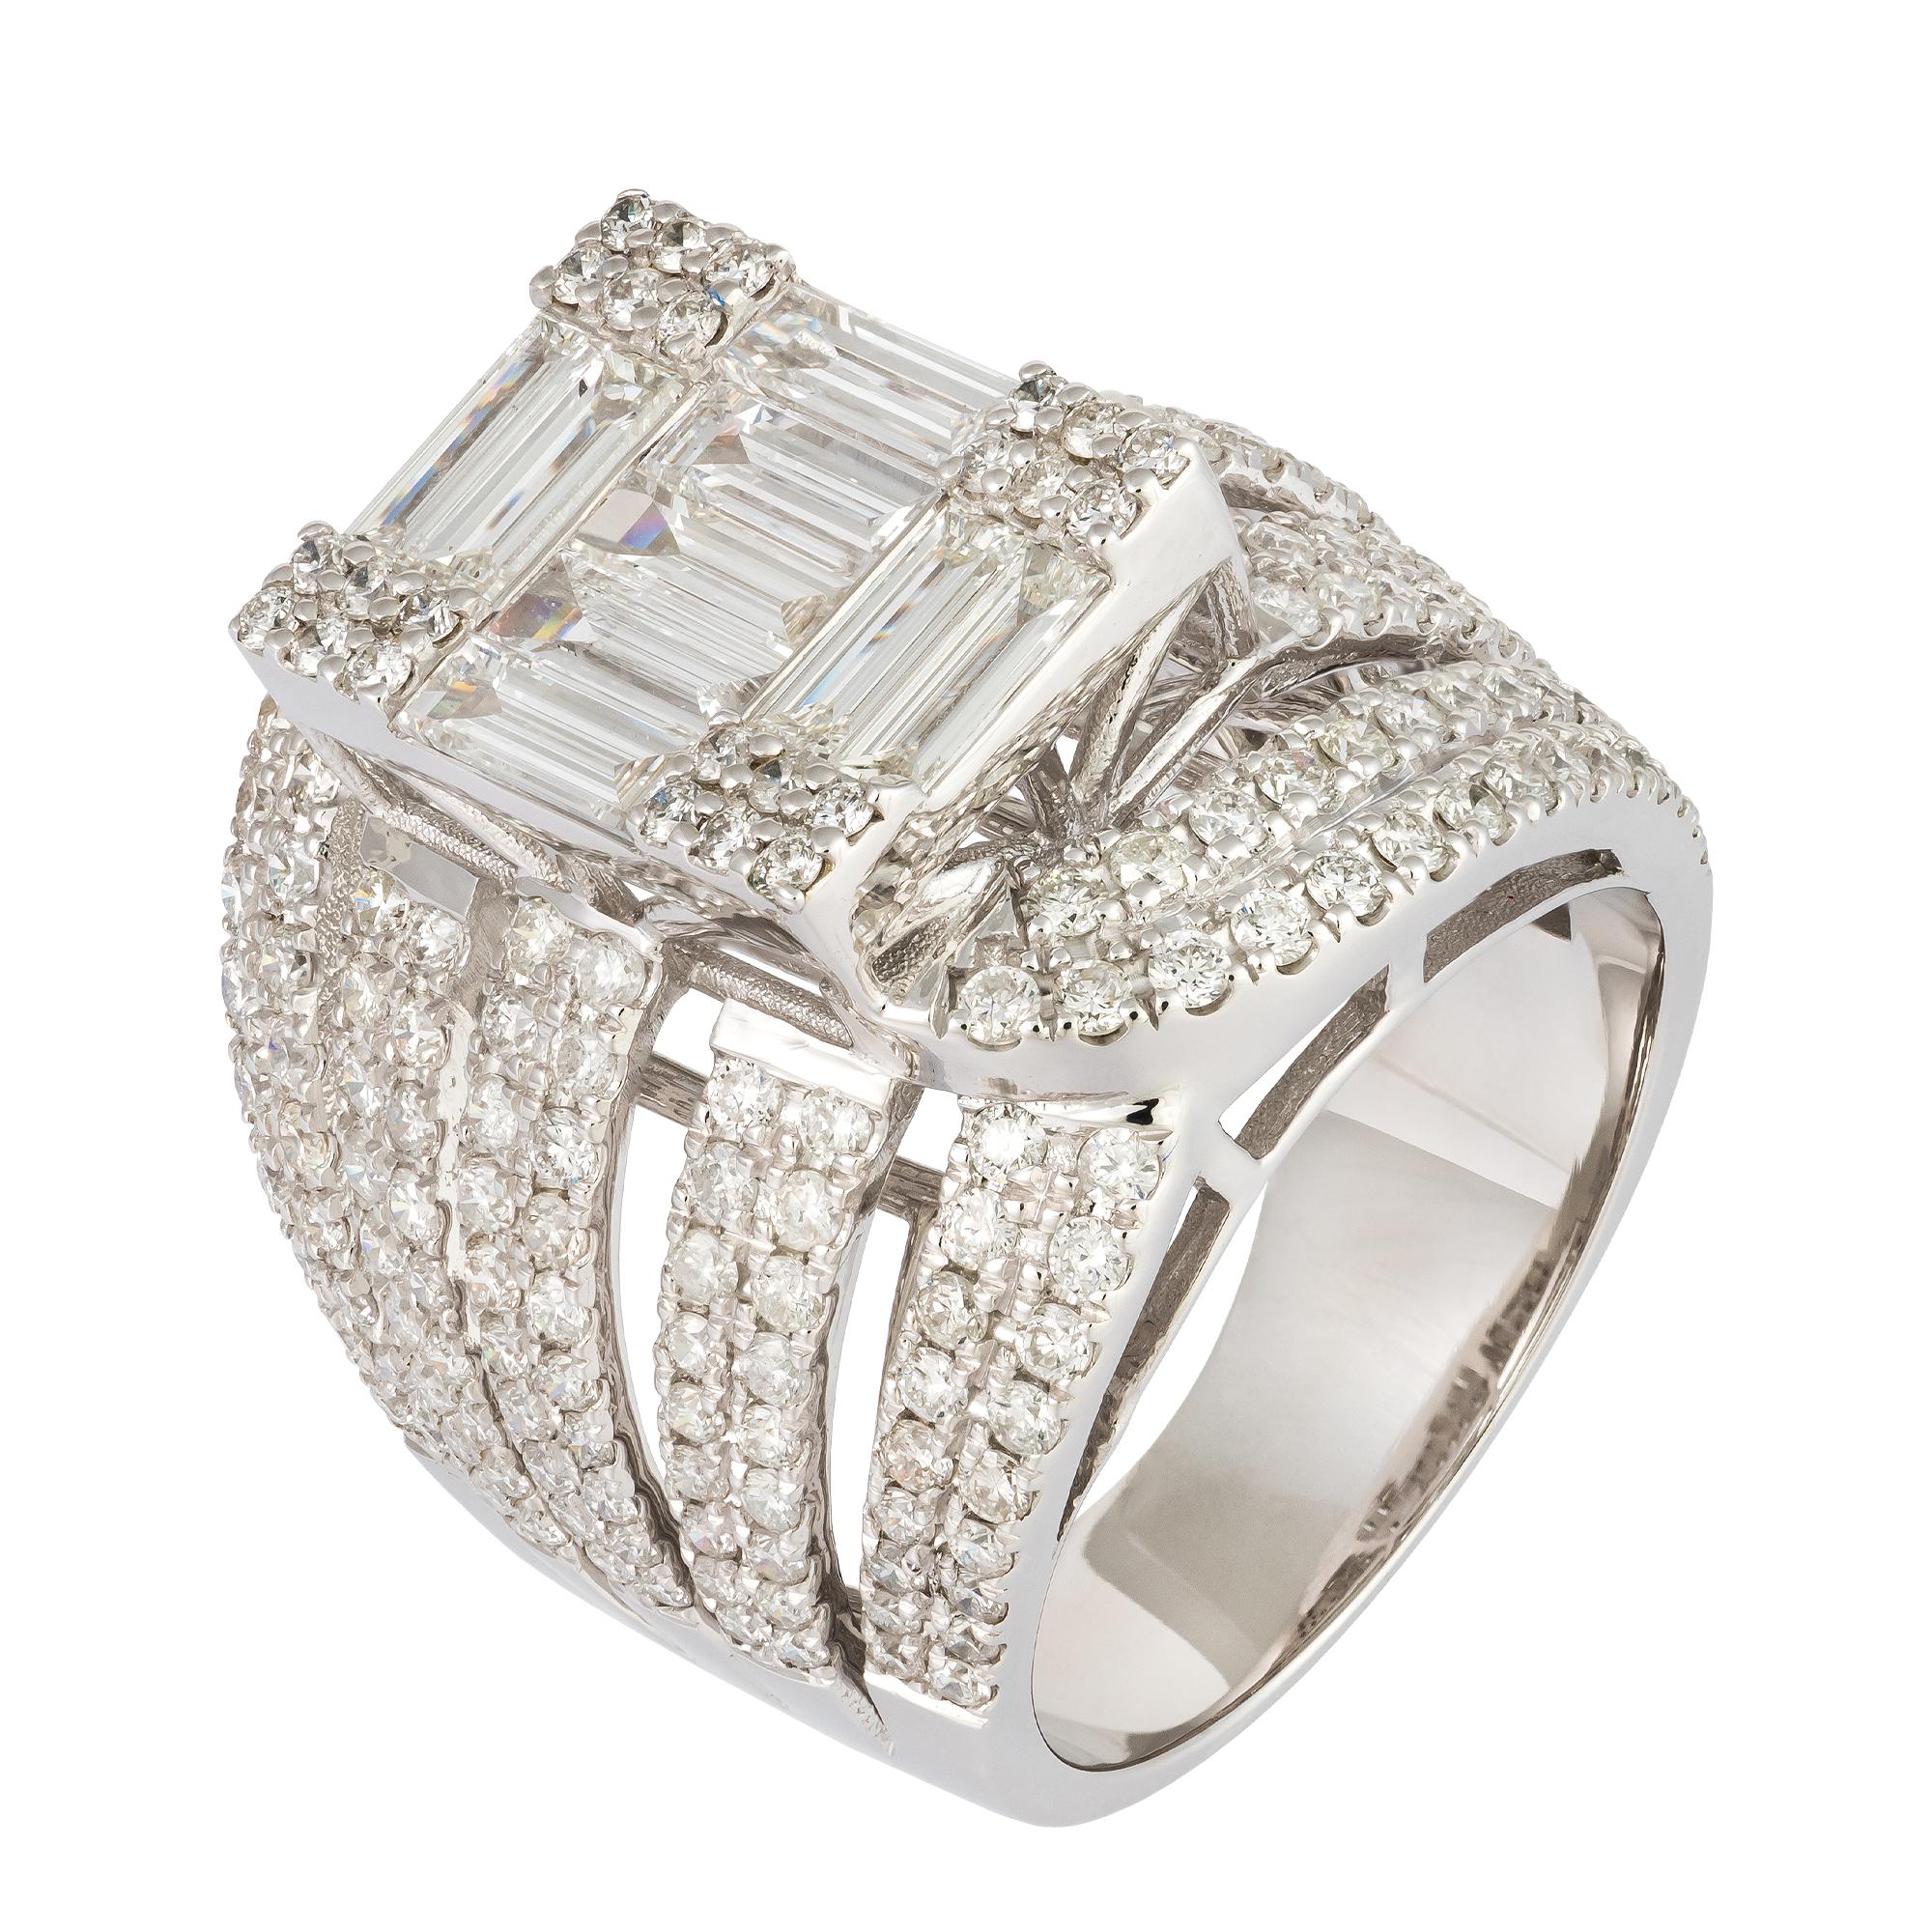 For Sale:  Unique White 18K Gold White Diamond Ring For Her 4